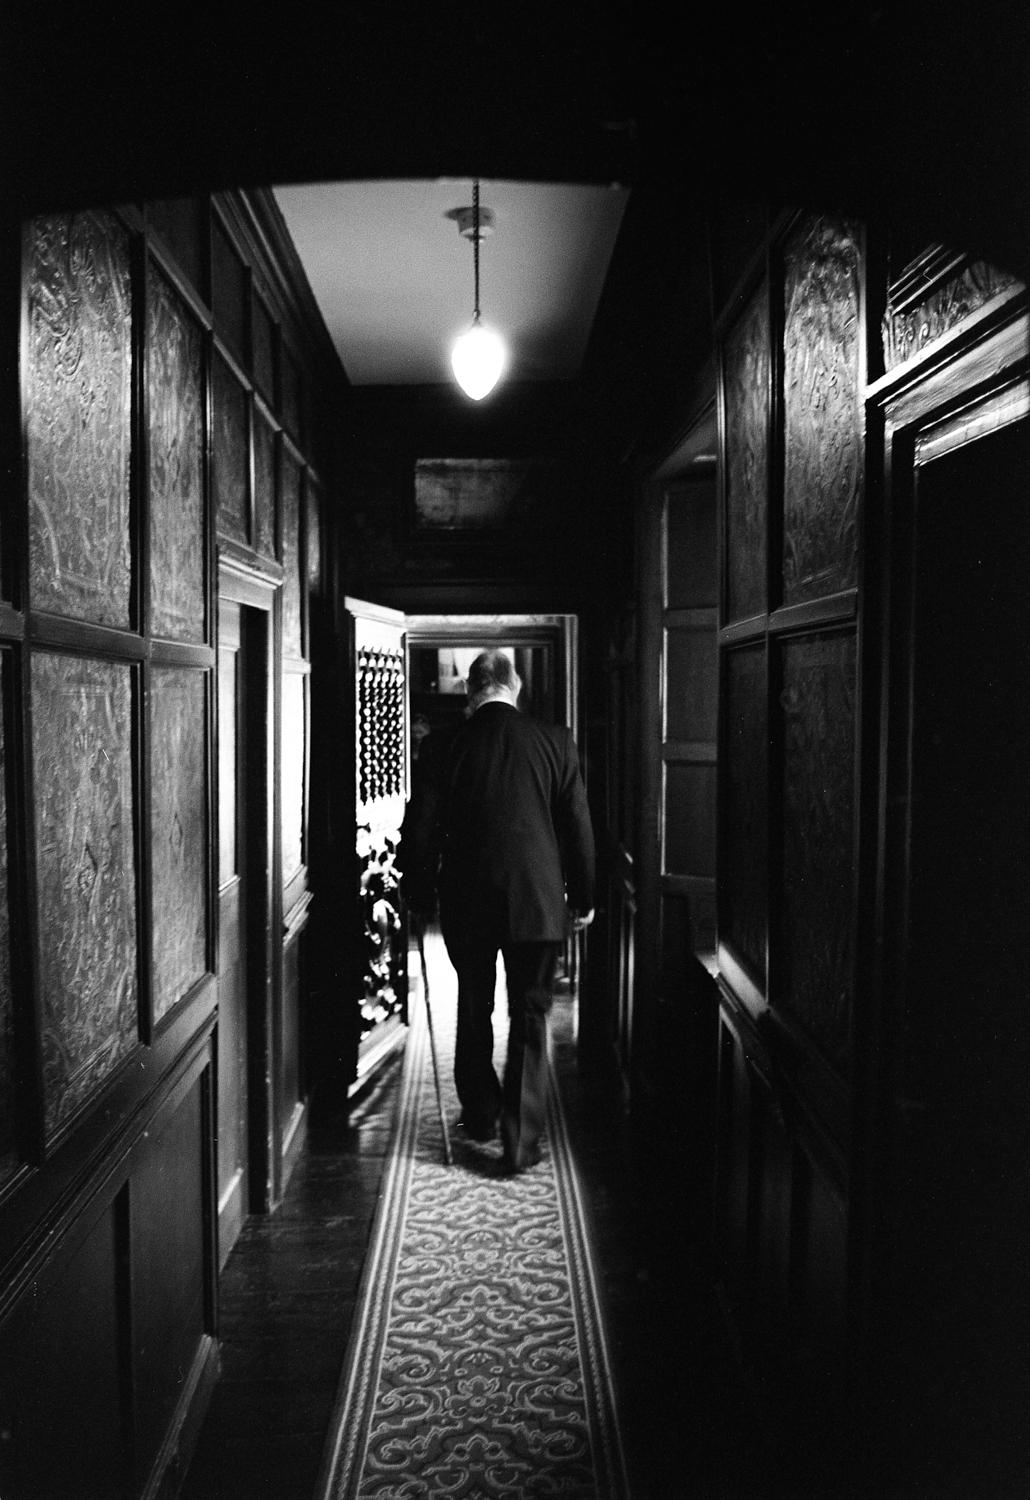 Paul Cooklin Landscape Photograph - Edition 2/10 - Old Man in Corridor, Oxburgh Hall, Silver Gelatin Photograph